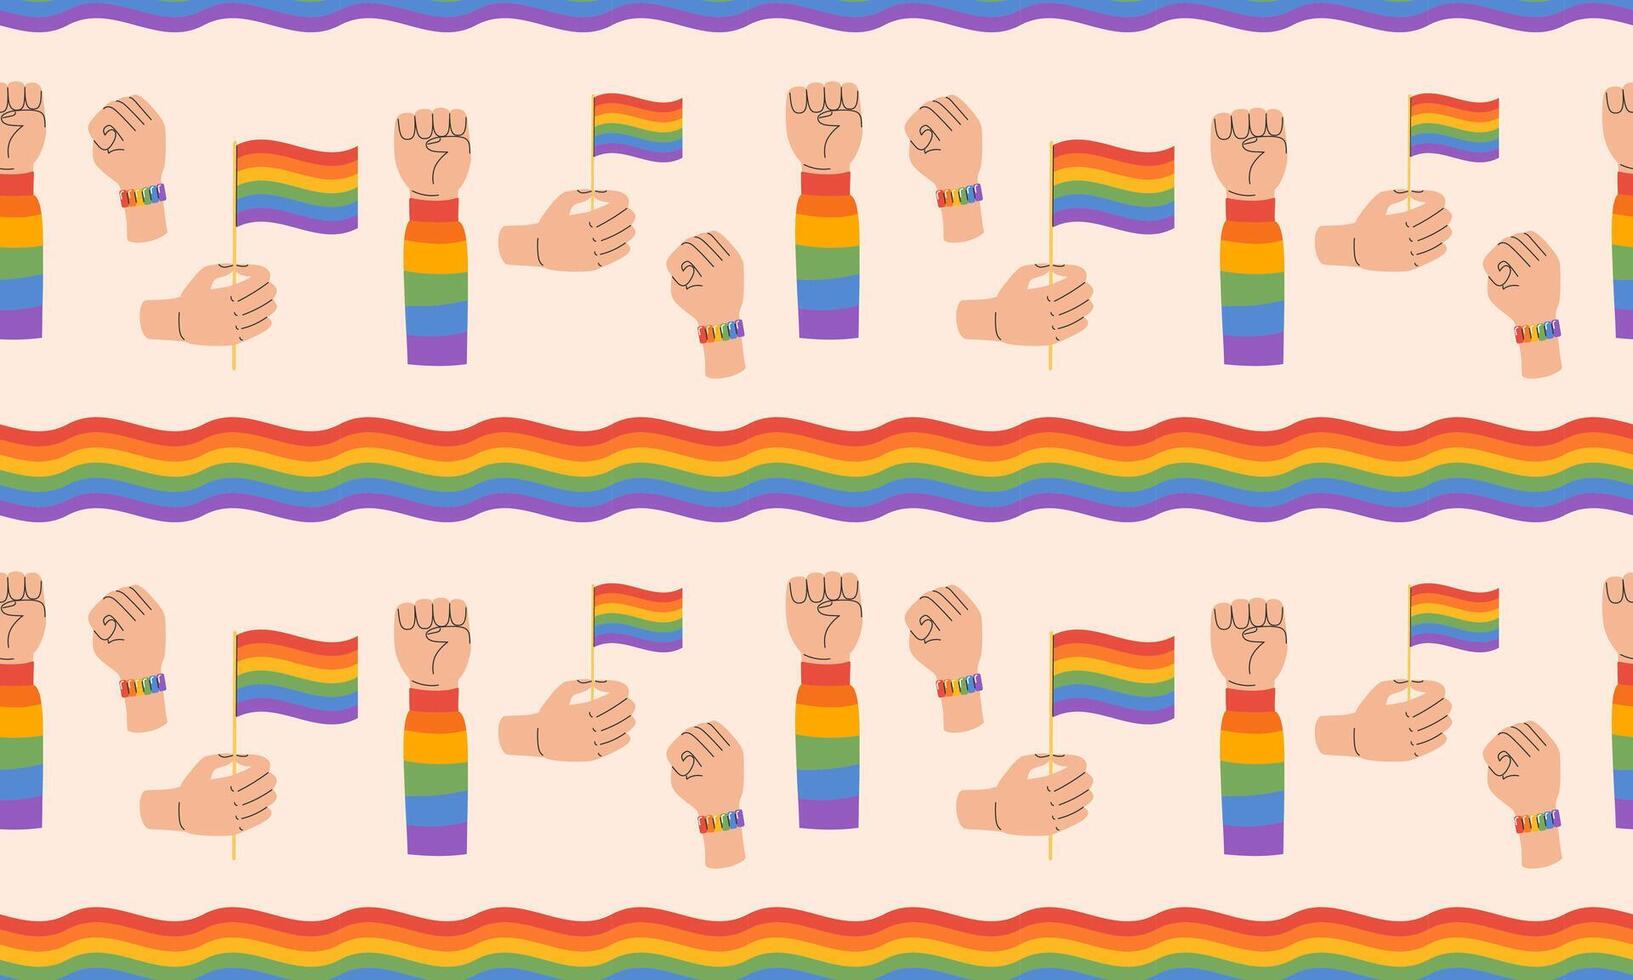 Seamless pattern with Symbol of LGBTQ pride community. Hand holding rainbow LGBT flag. Raised fist gesture. LGBT pride month. illustration vector